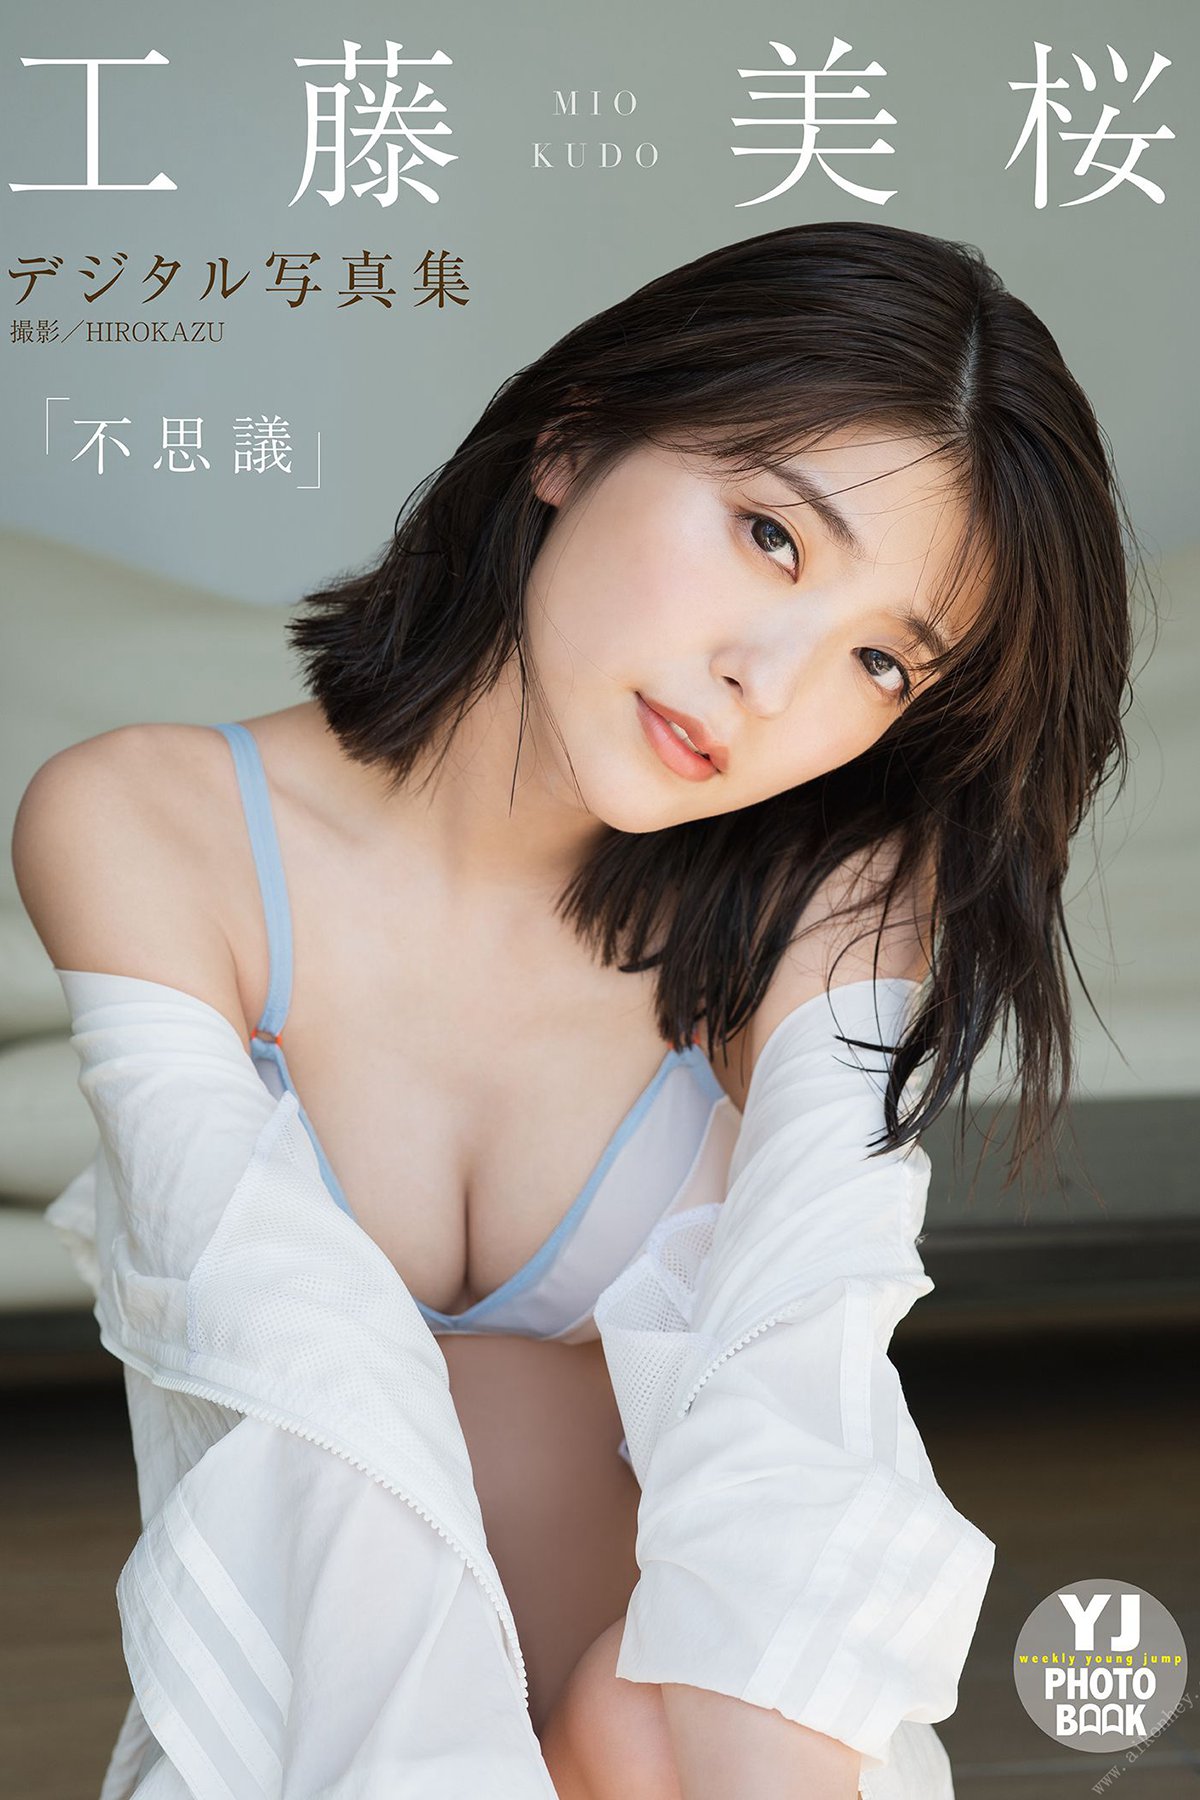 YJ Photobook 2021-09-02 Mio Kudo 工藤美桜 – Wonder 不思議